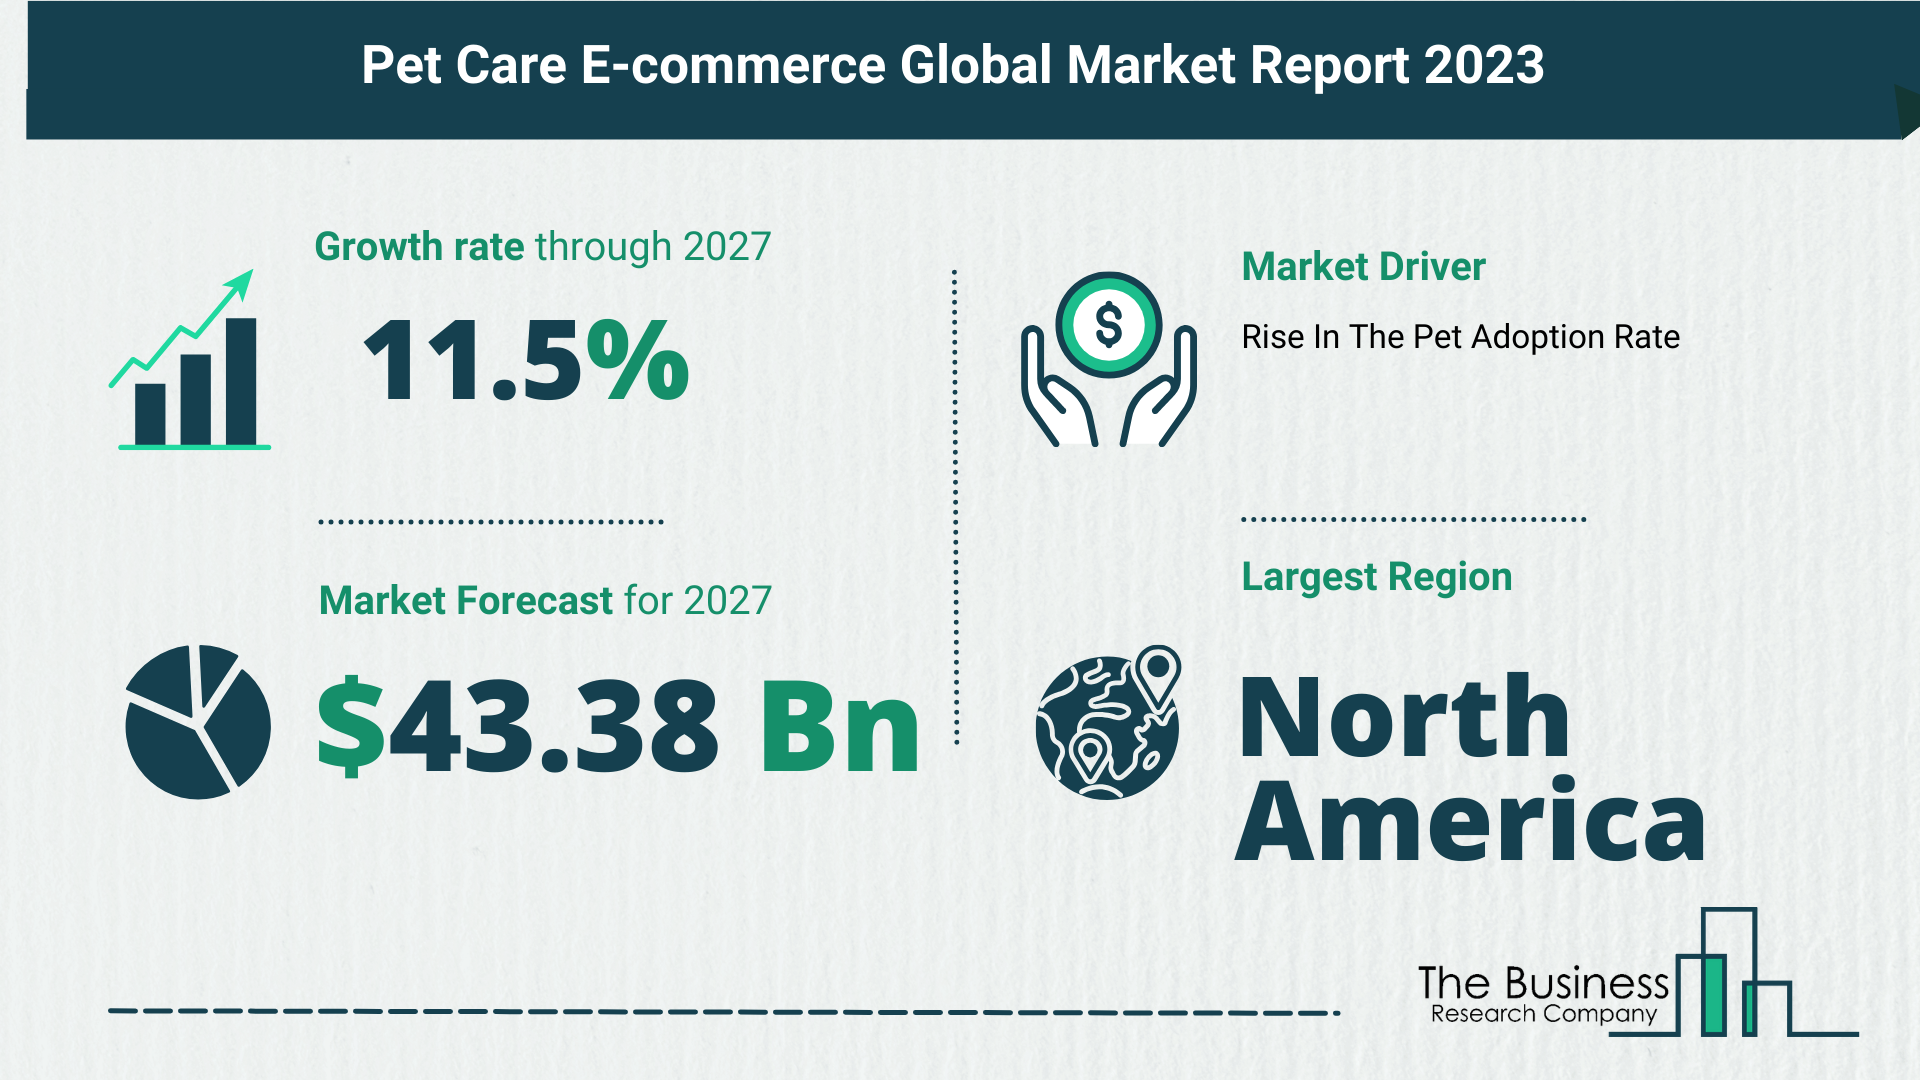 Global Pet Care E-commerce Market